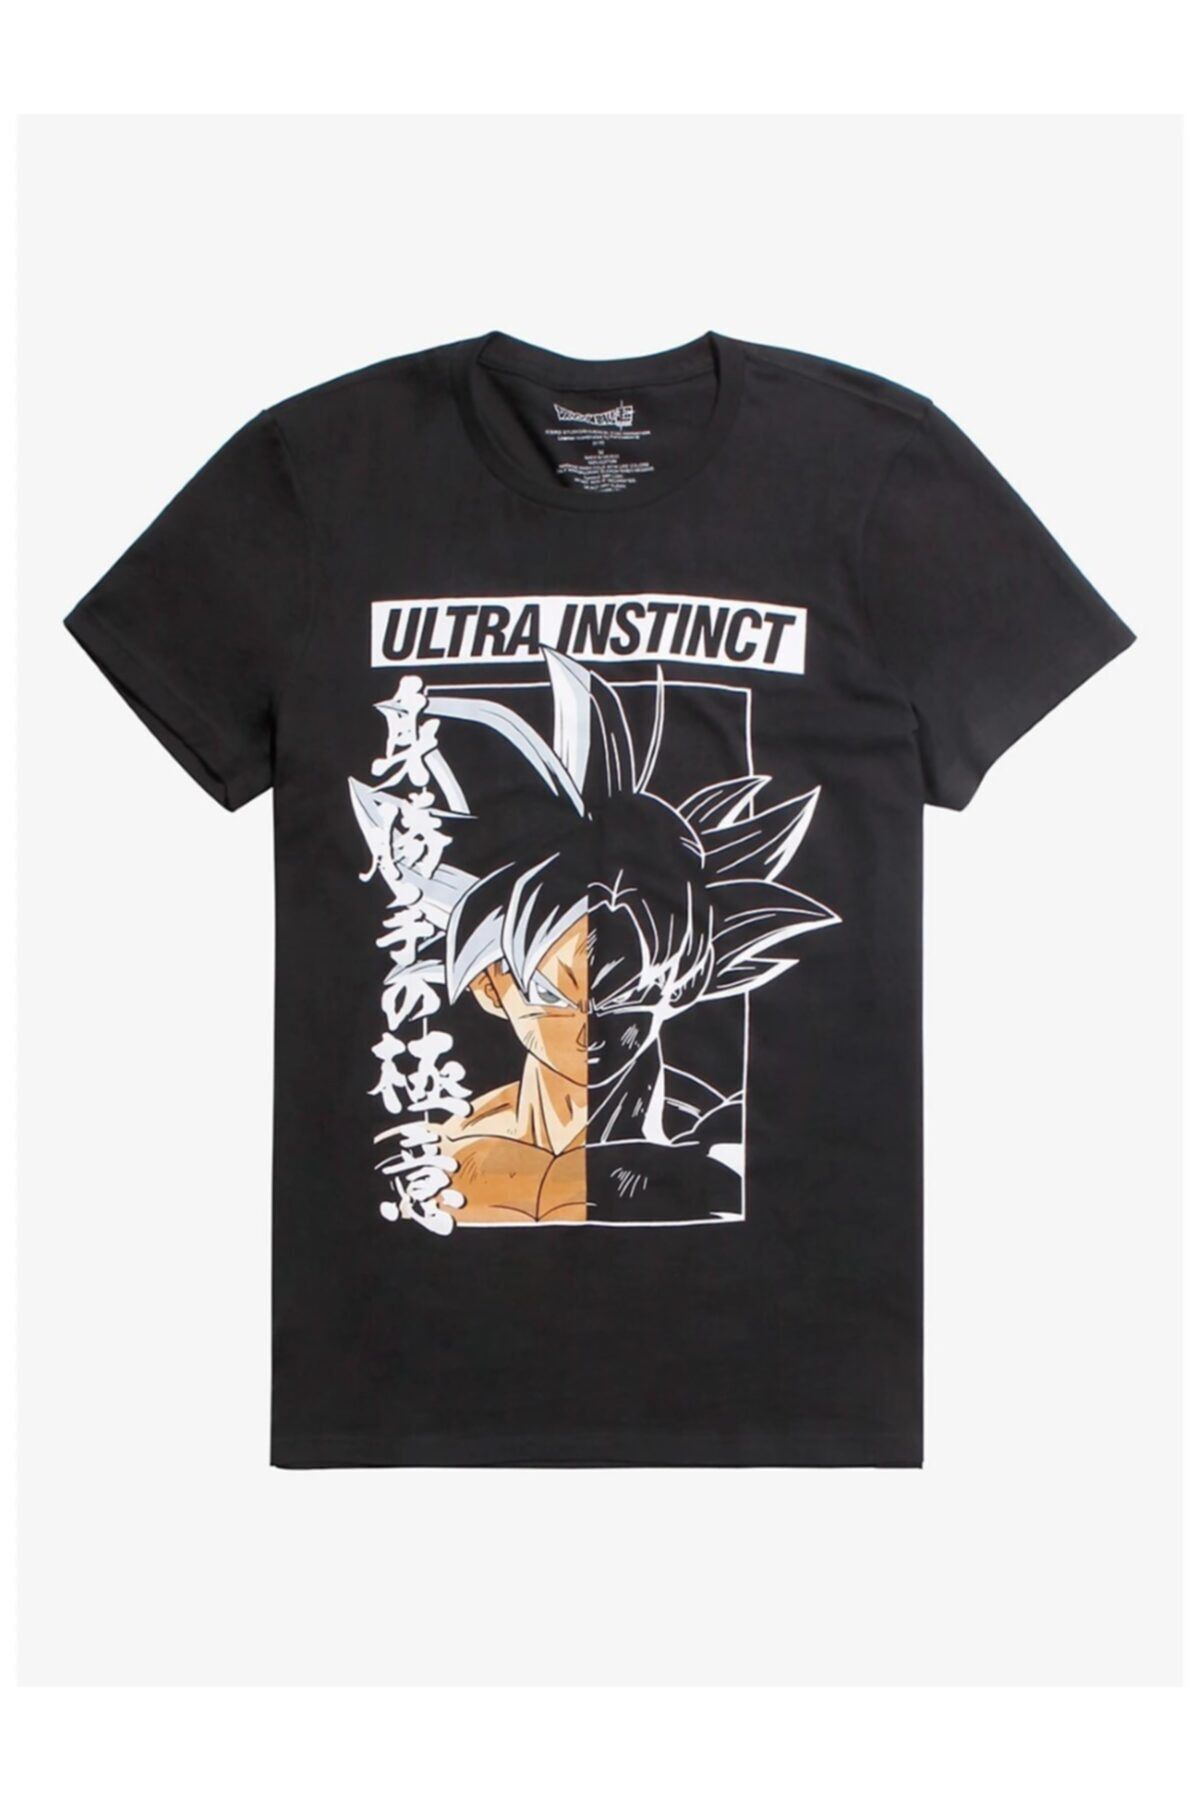 GALASHOP Dragon Ball Super Goku Ultra Instinct Split T-shirt 152